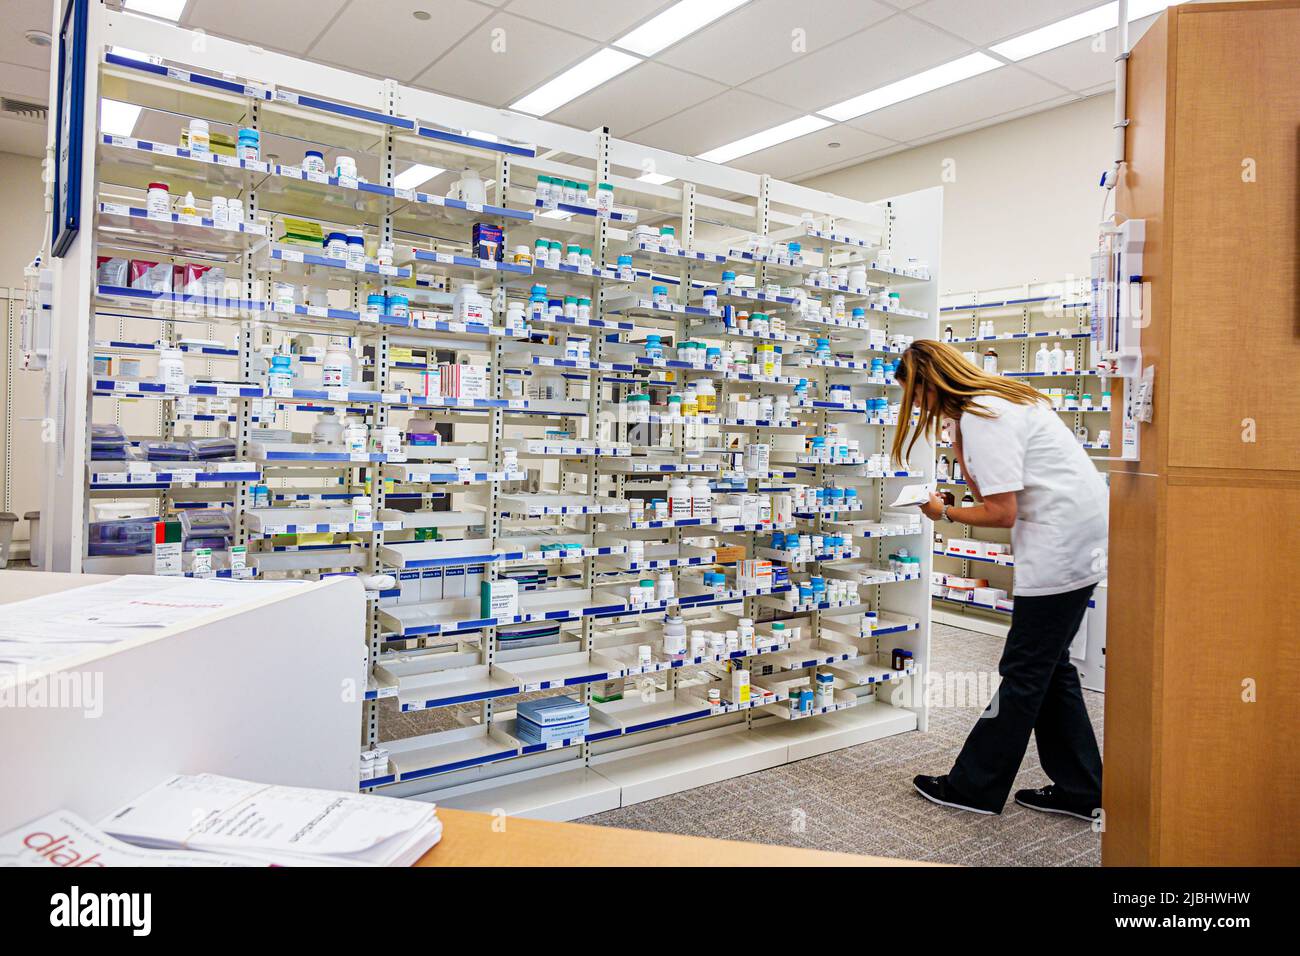 Miami Beach Florida,Walgreens pharmacy,drugstore pharmacist woman female filling prescription,employee worker working staff medicine drugs Stock Photo